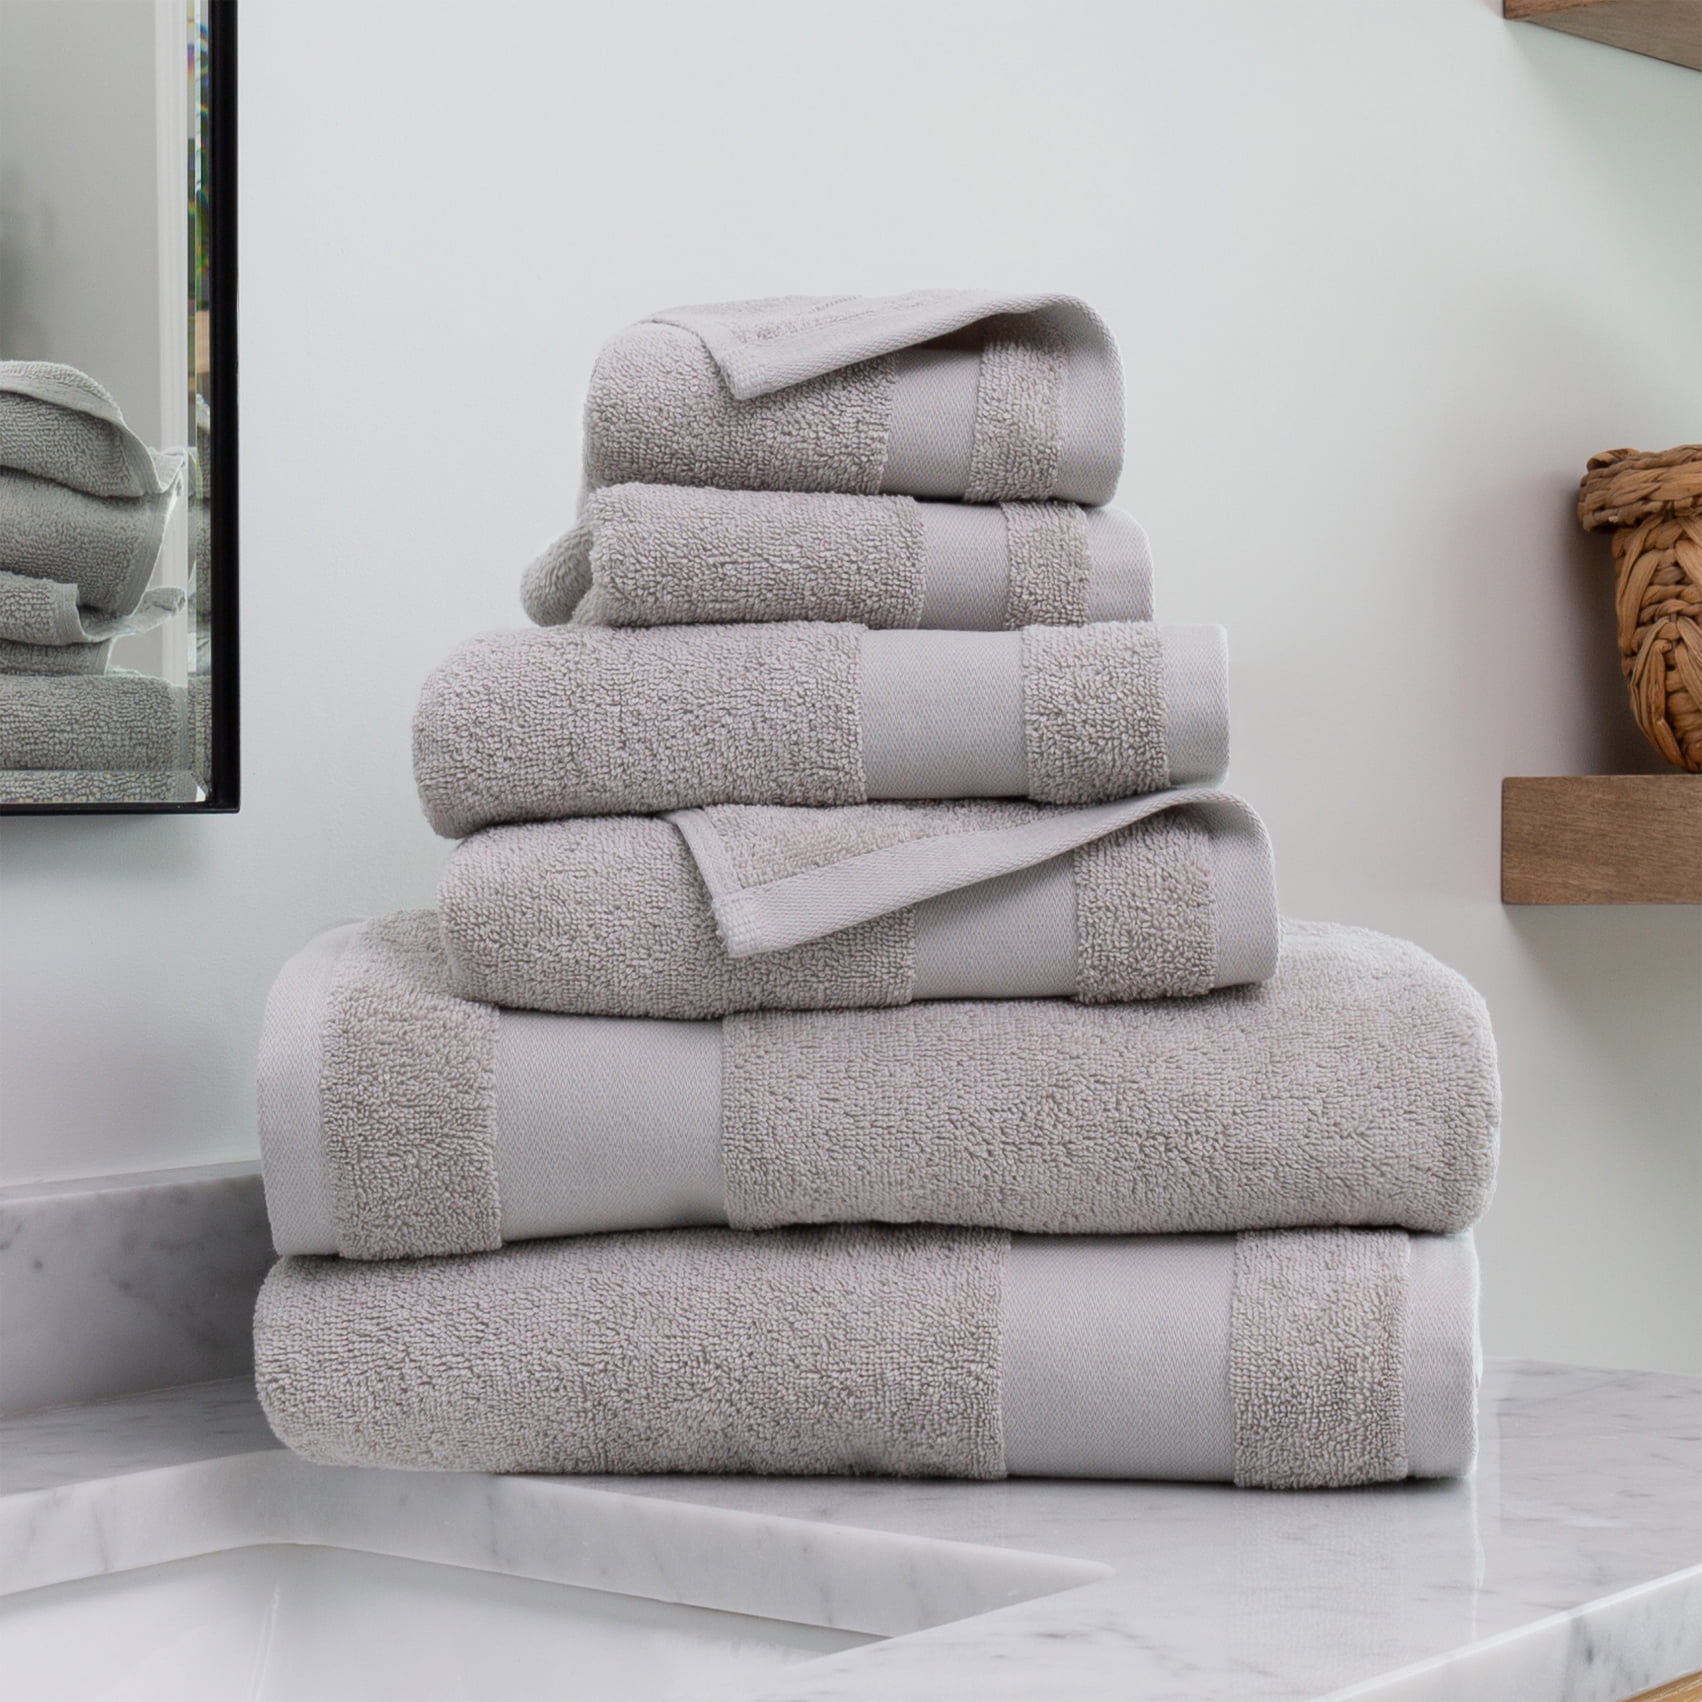 Sobel Westex Traditional 6 Piece Cotton Bath Towel Set, Gray - Walmart.com